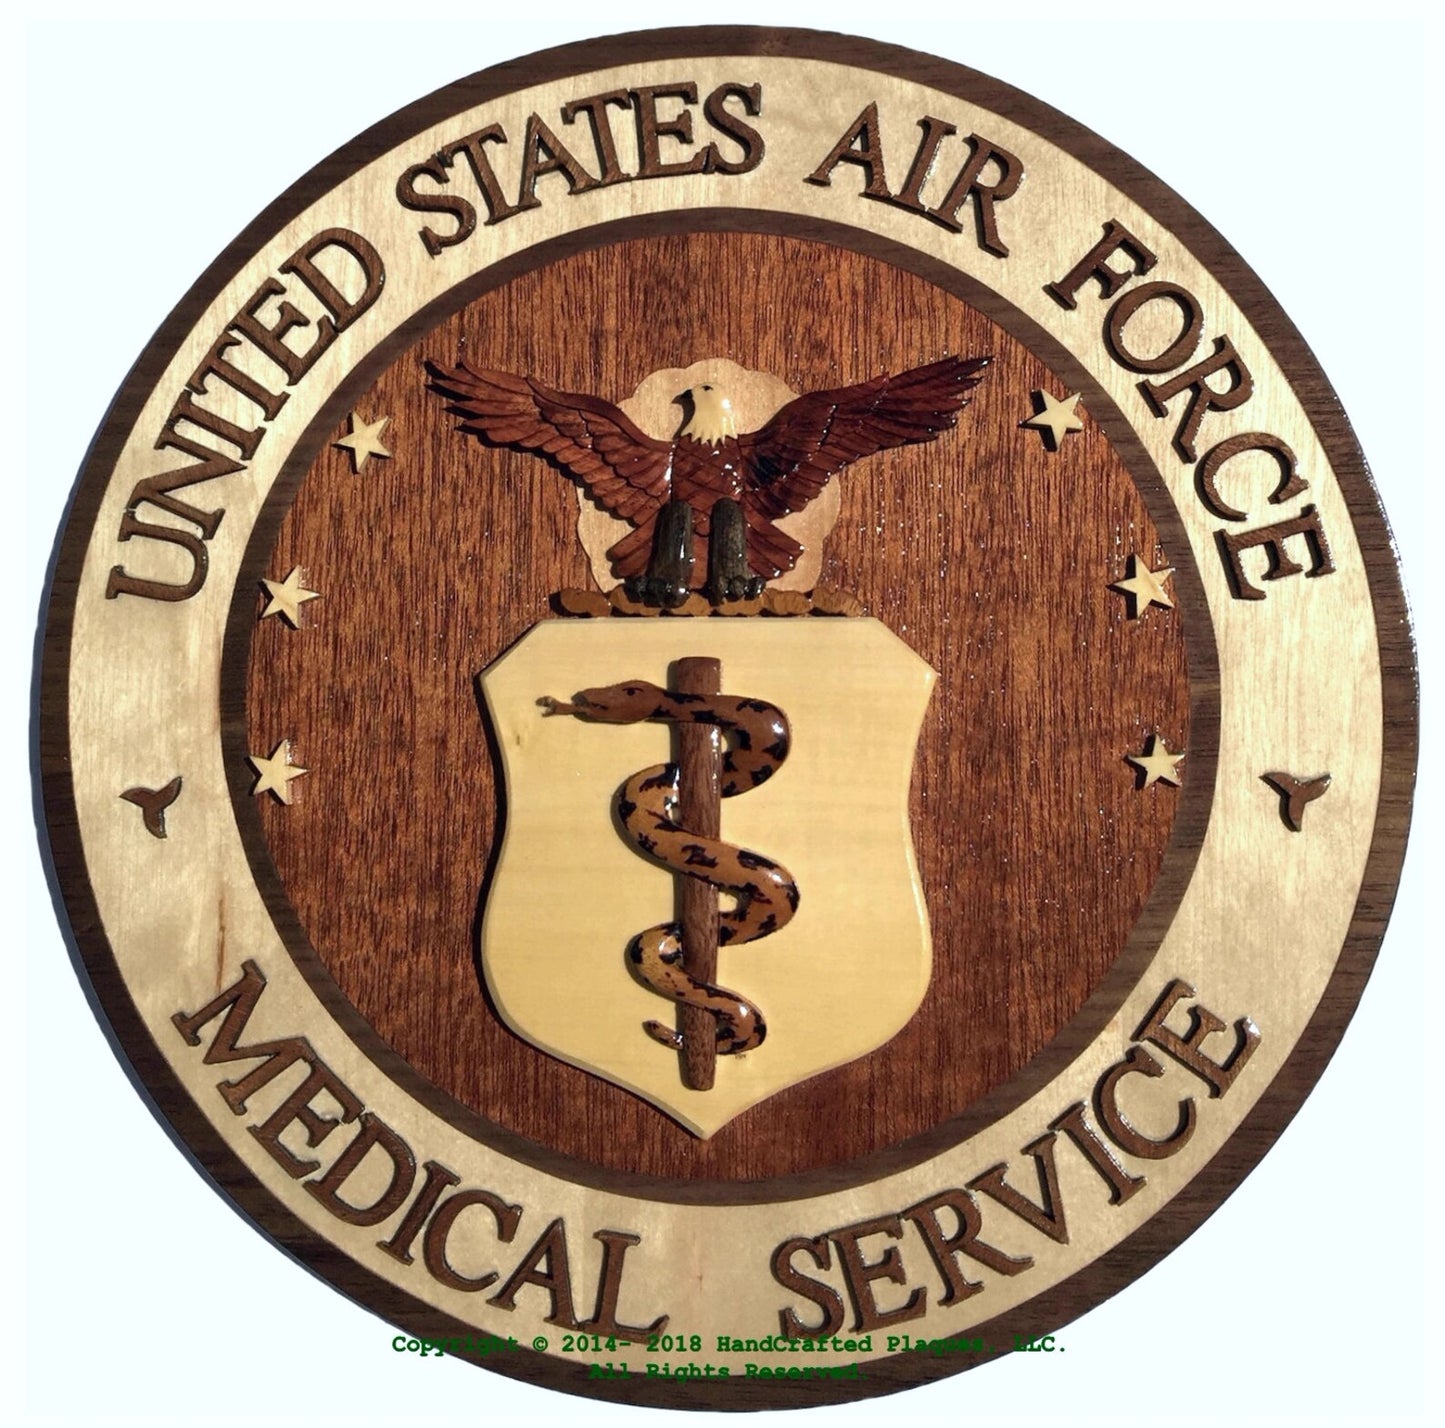 AIR FORCE MEDICAL SERVICE SEAL